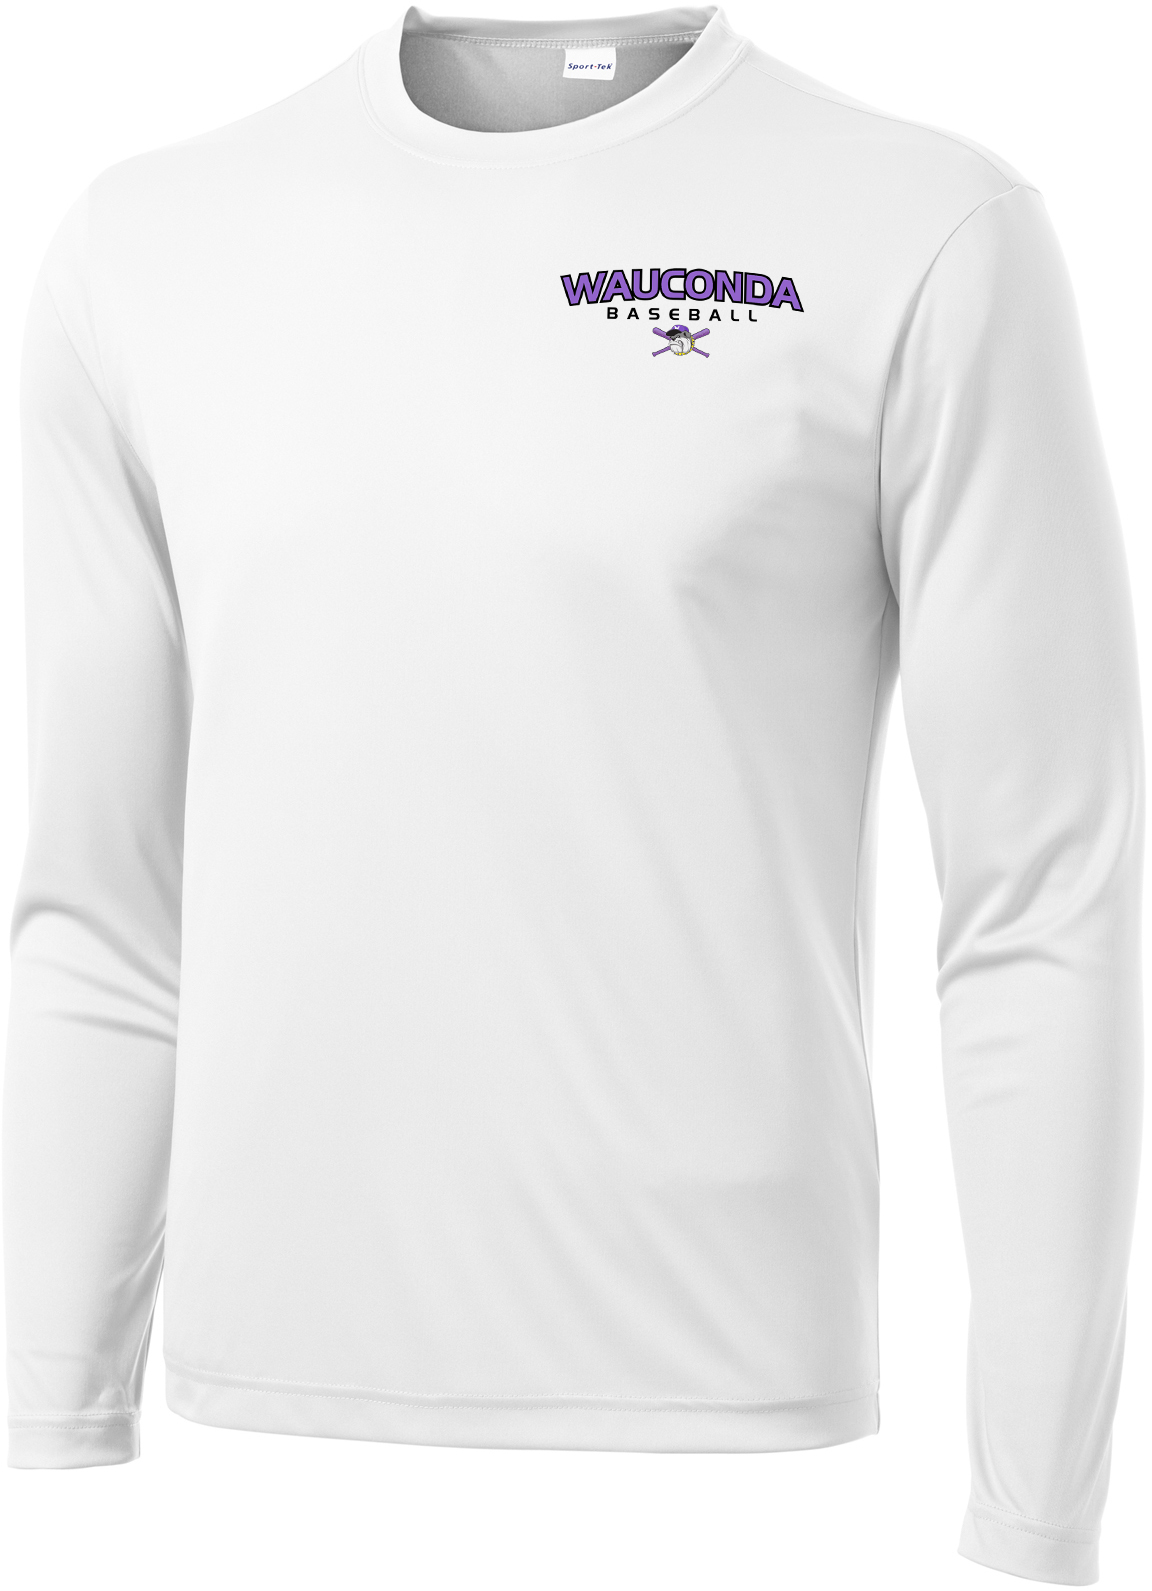 Wauconda Baseball Long Sleeve Performance Shirt